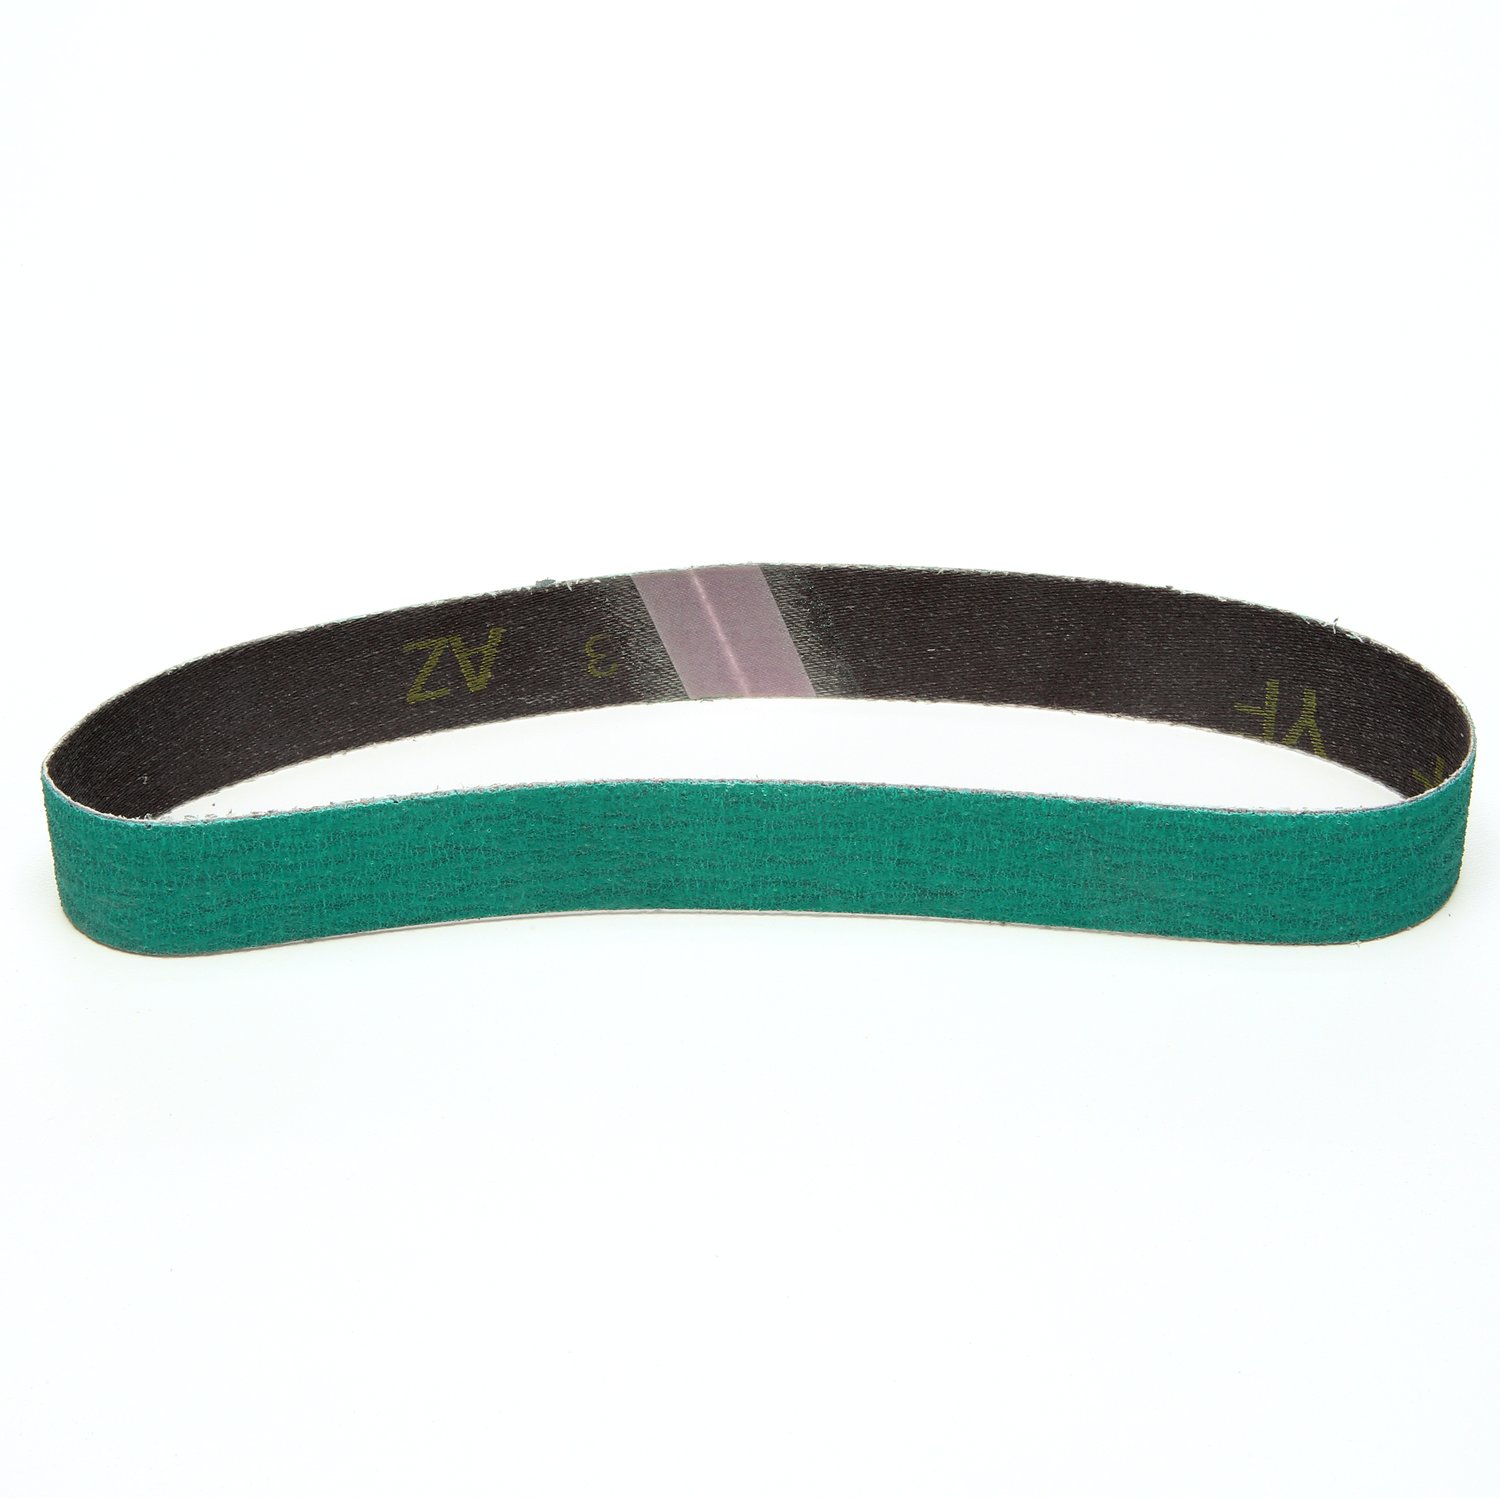 7010517501 - 3M Cloth Belt 577F, 36 YF-weight, 1-1/2 in x 30 in, Fabri-lok,
Single-flex